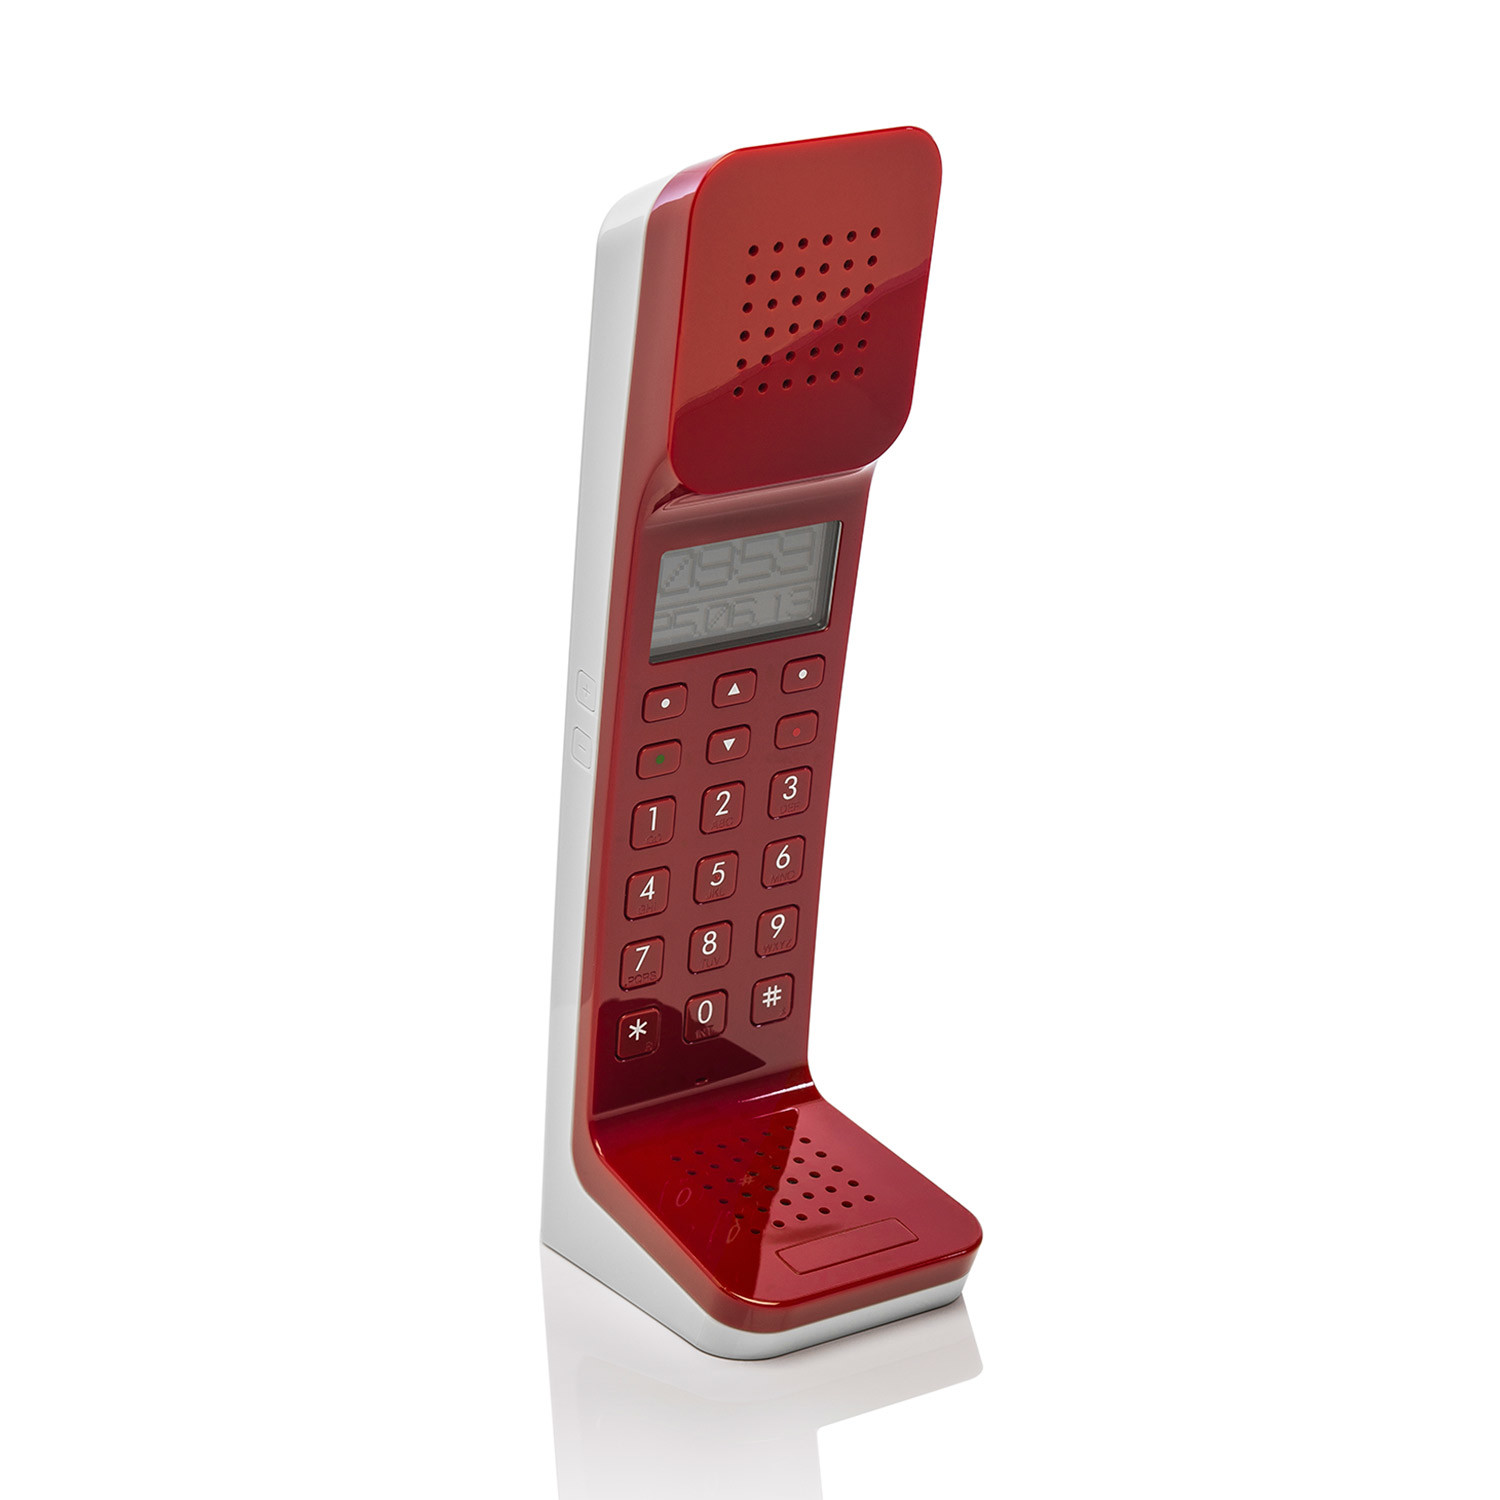 swissvoice L7 telephone set  Home phone, Industrial design, Phone